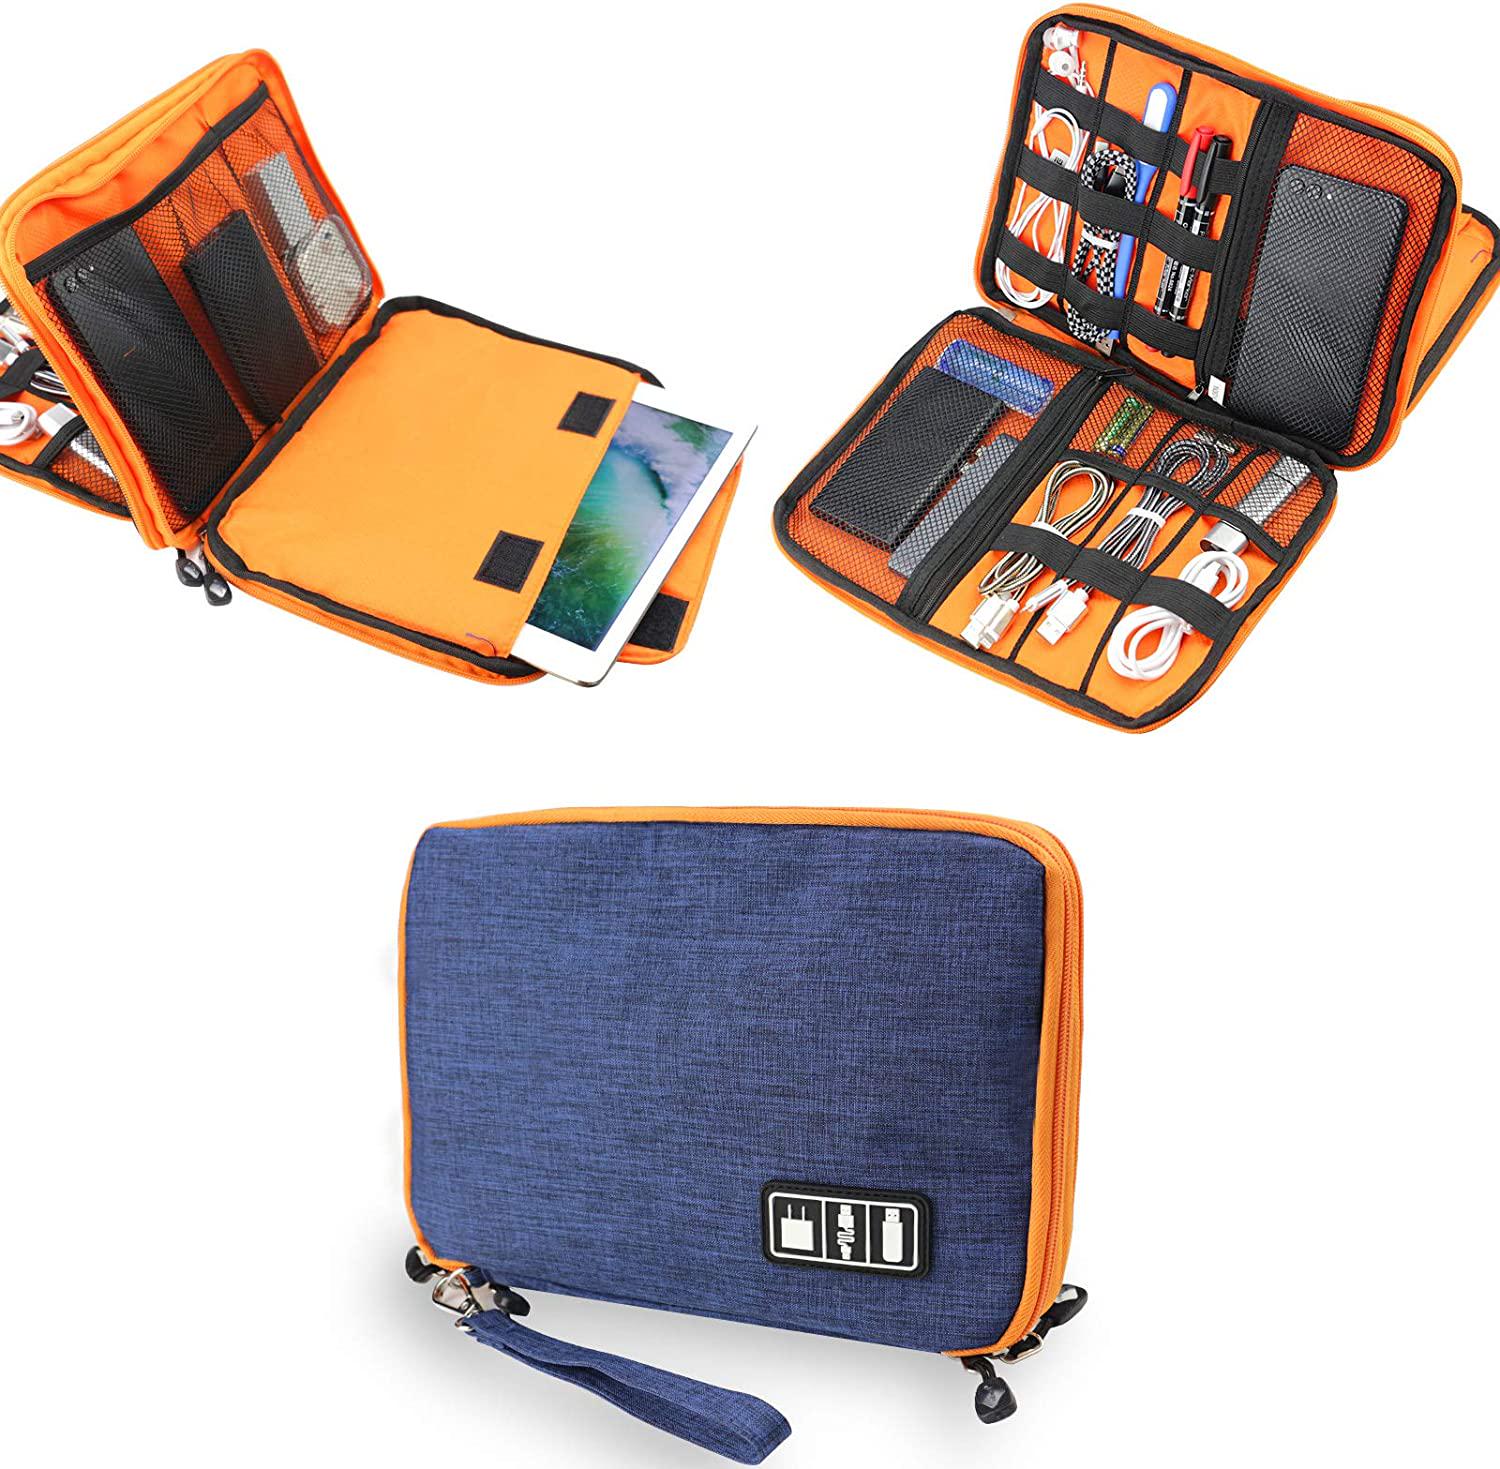 Topbooc, Electronics Accessories Organizer Bag,Portable Tech Gear Phone Accessories Storage Carrying Travel Case Bag, Headphone Earphone Cable Organizer Bag (L-Blue)